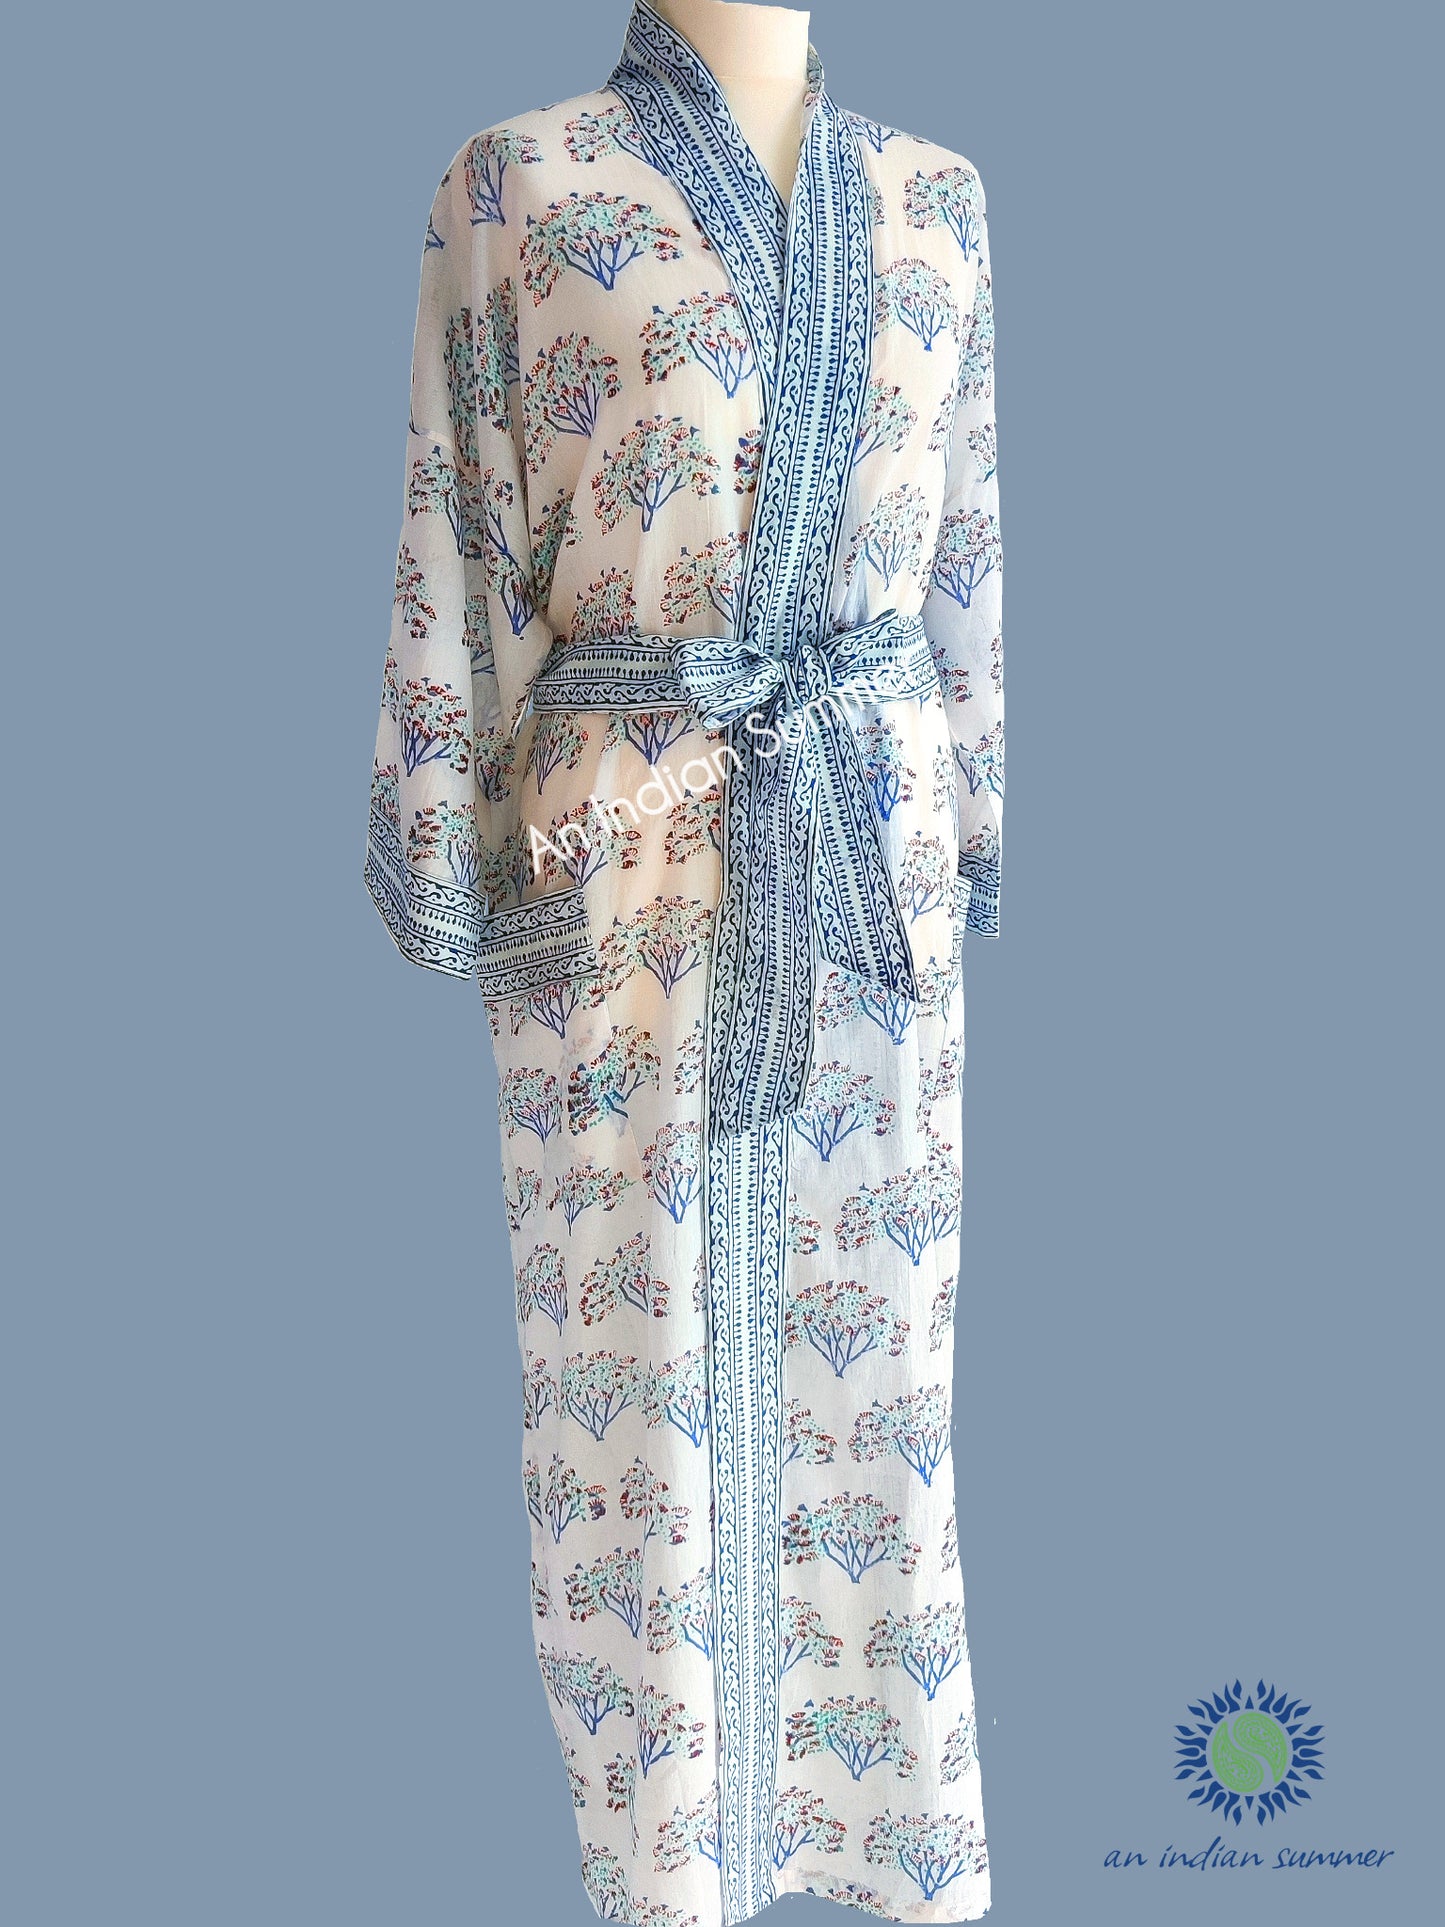 Long Kimono Robe | Bonsai Tree | Tree Block Print | Hand Block Printed | Cotton Voile | An Indian Summer | Seasonless Timeless Sustainable Ethical Authentic Artisan Conscious Clothing Lifestyle Brand